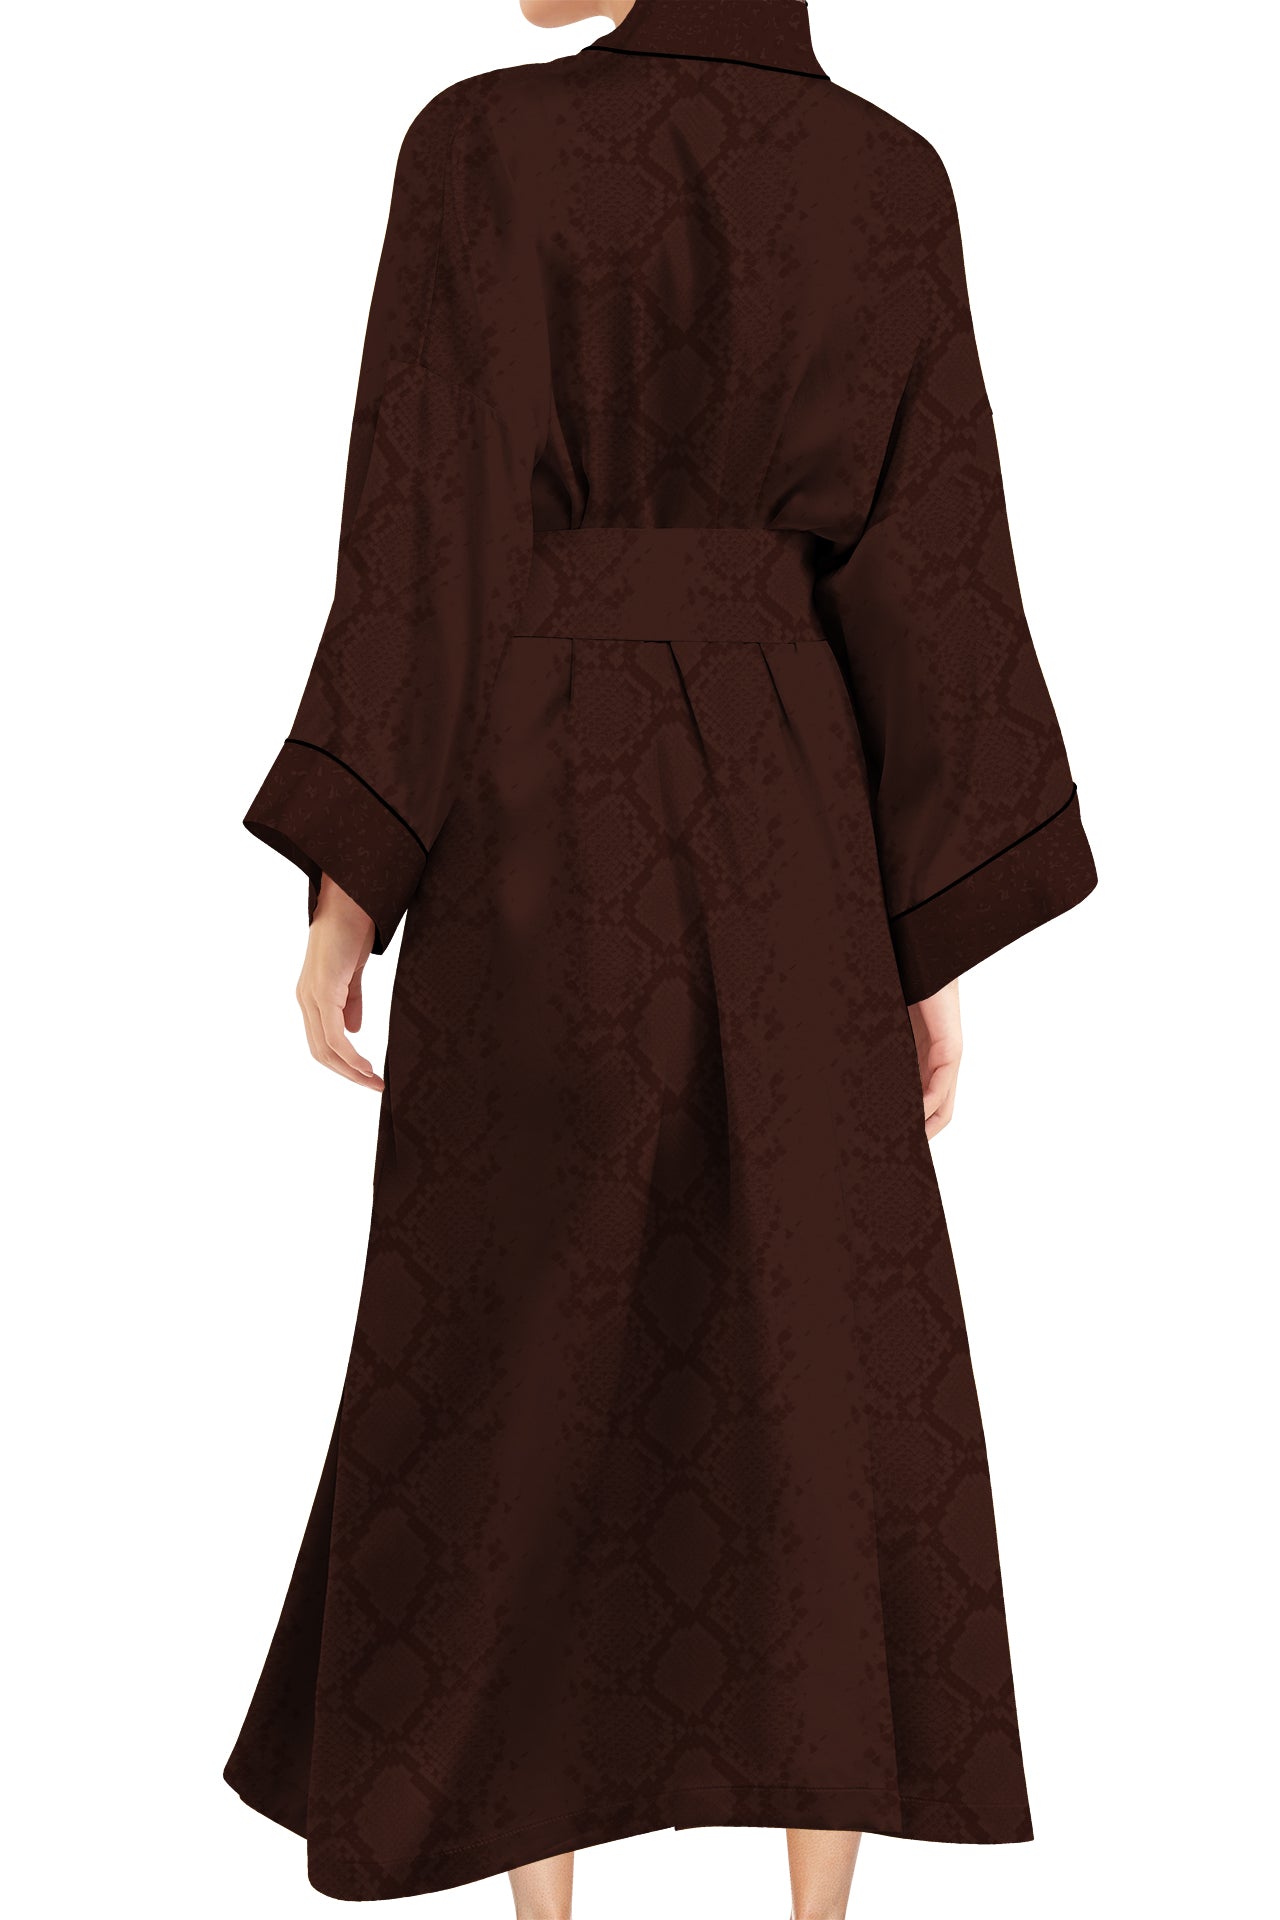 Kimono Solid Brown Robe in Midi Length